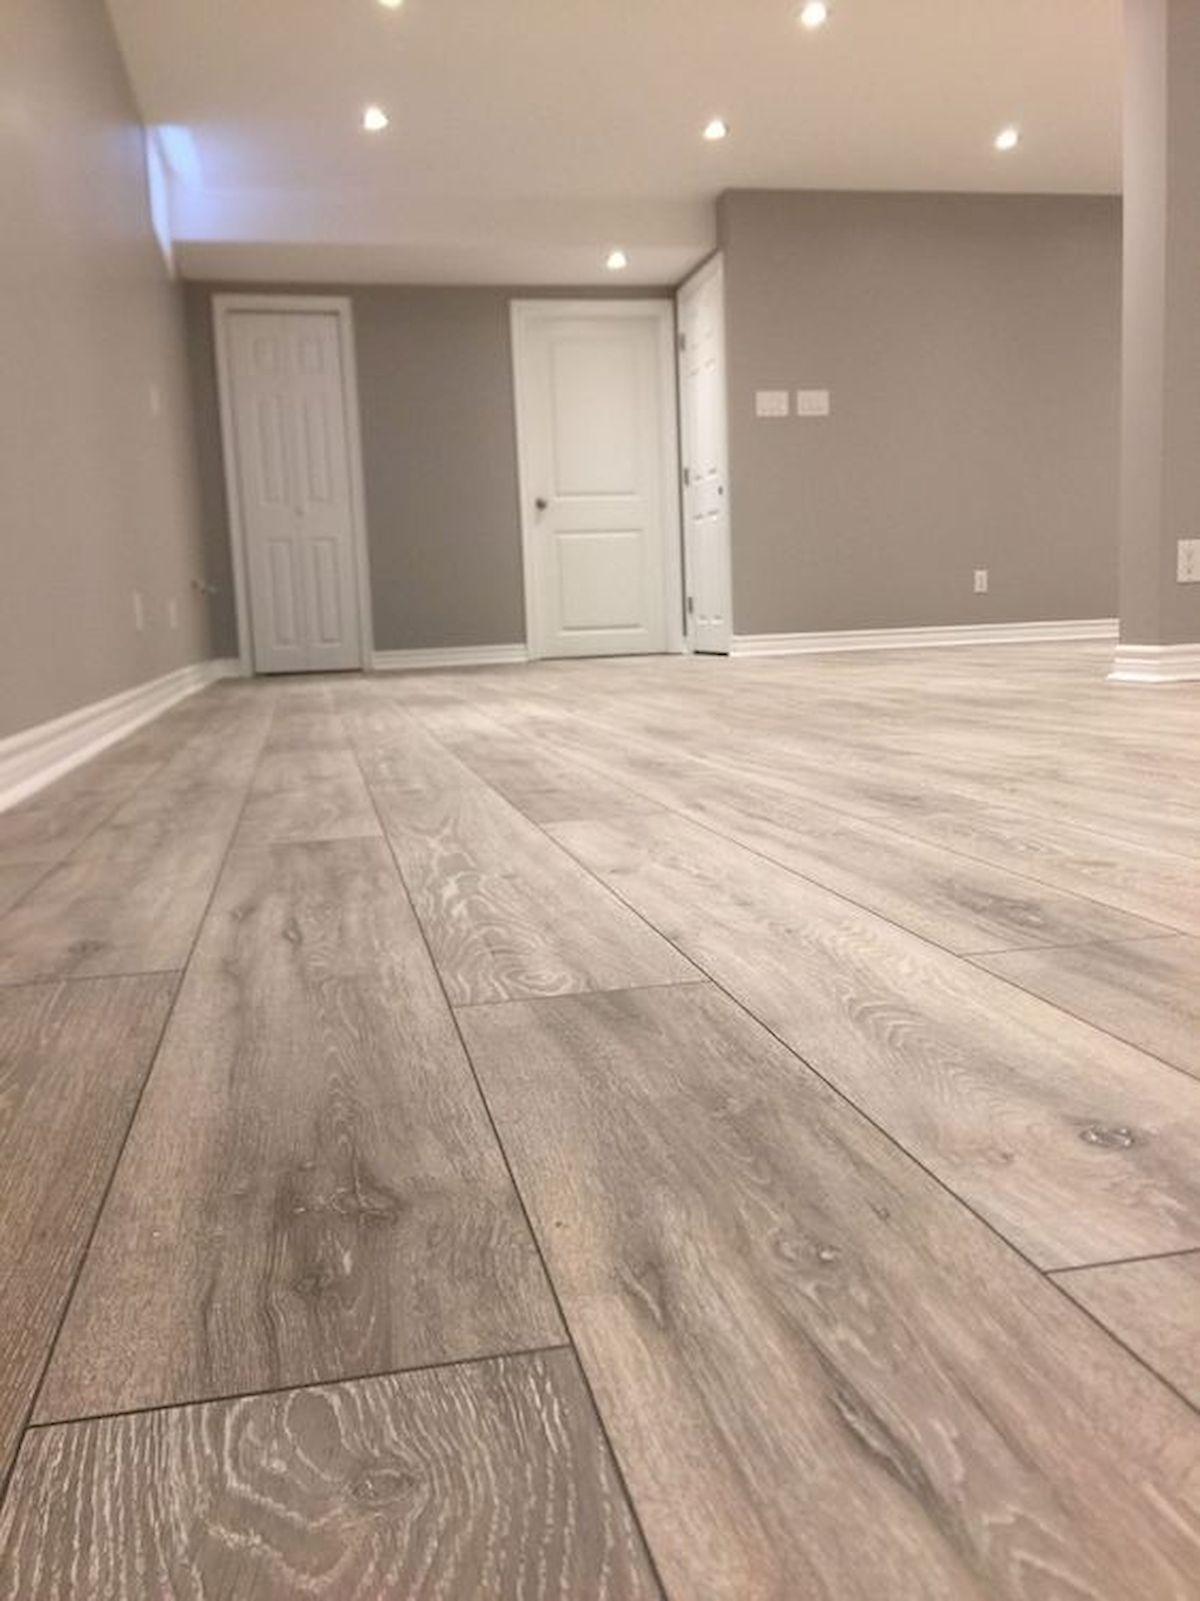 80 Gorgeous Hardwood Floor Ideas for Interior Home (55)